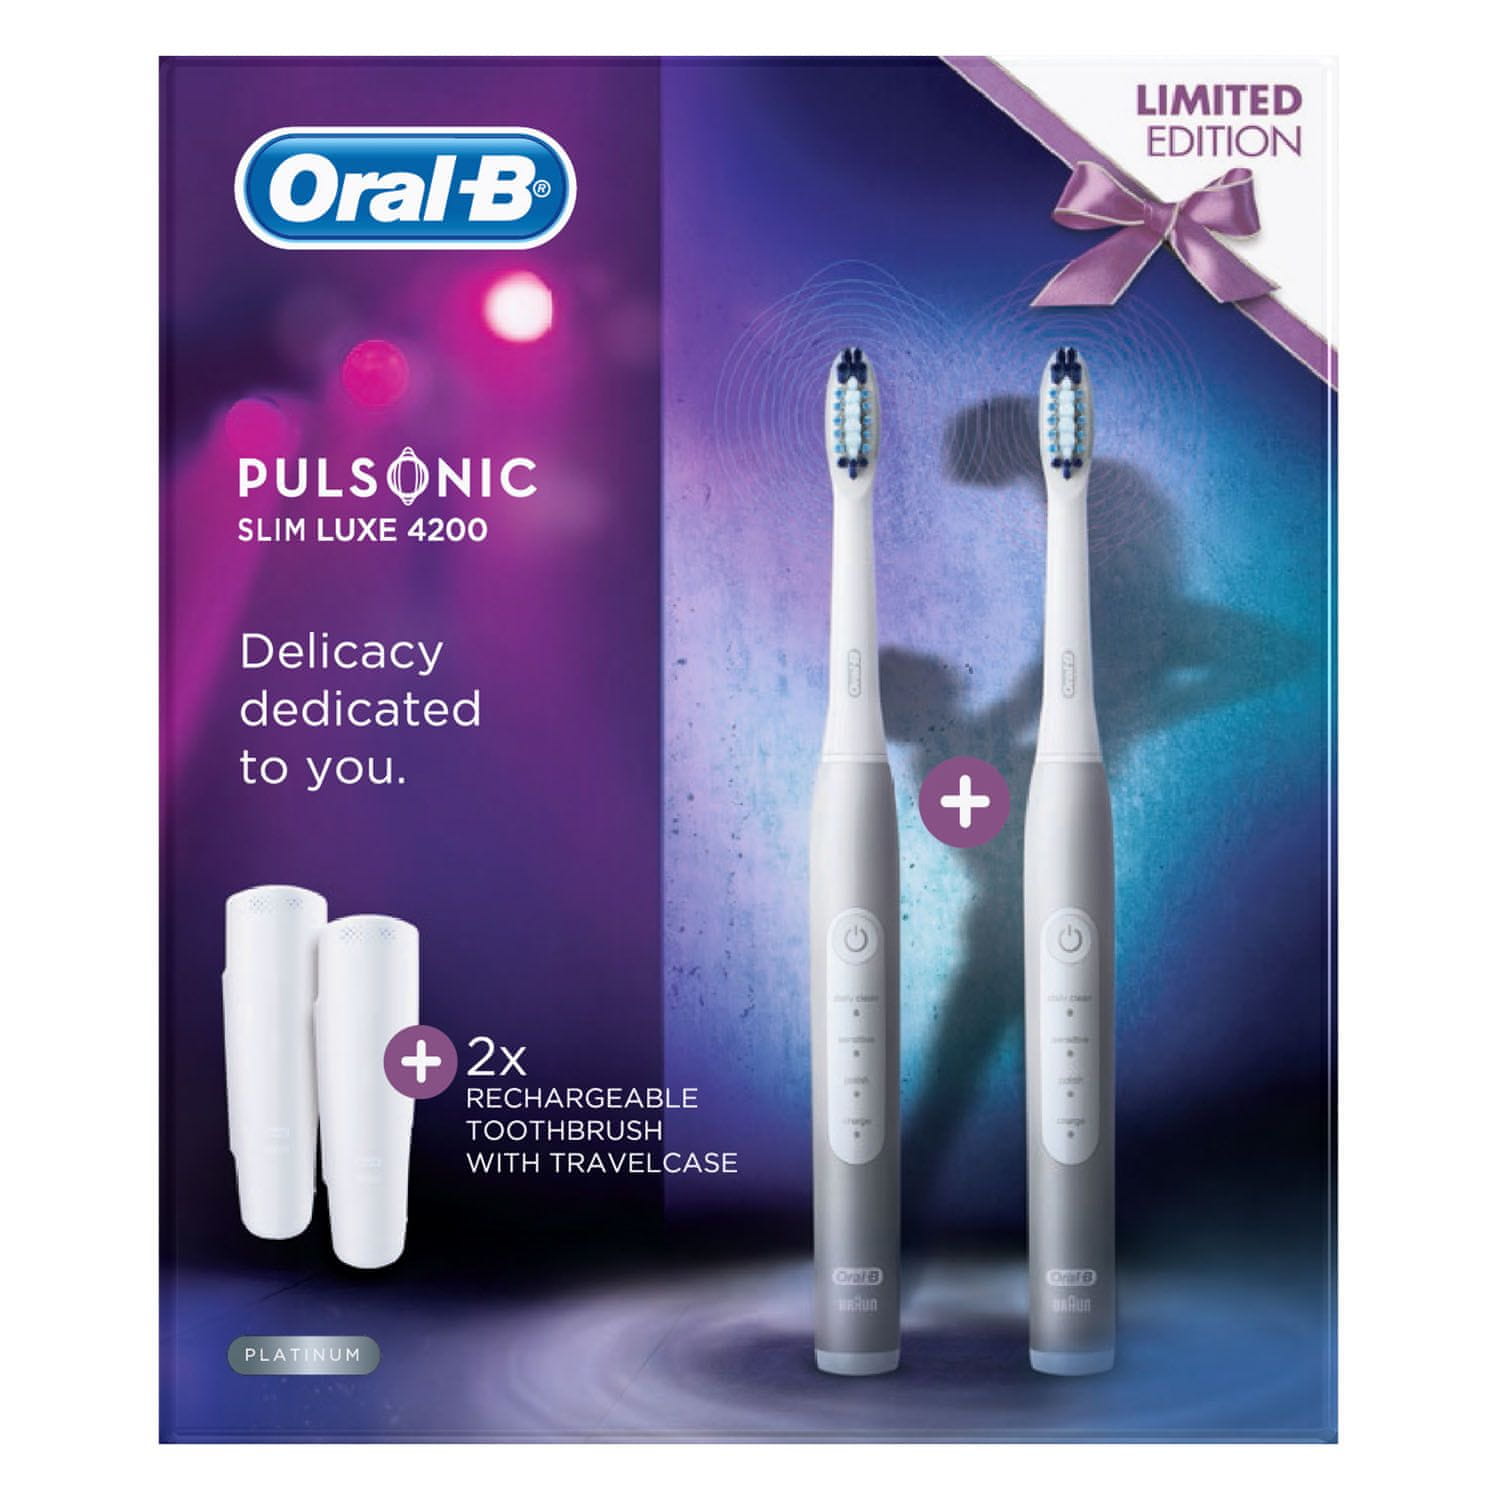 Oral-B Pulsonic Slim Luxe 4200 Duo Sonic tehnologija